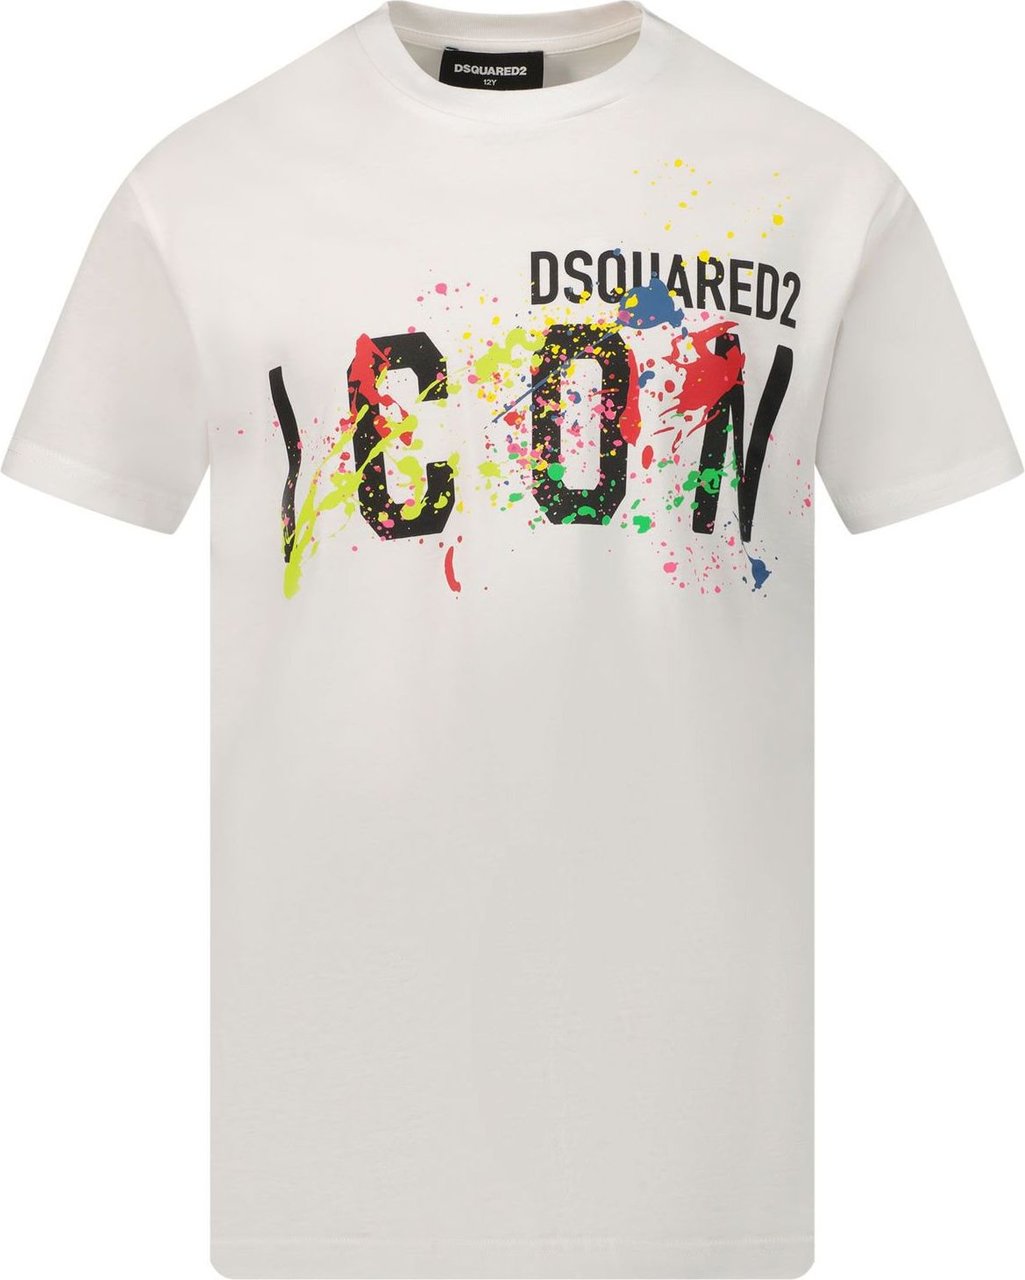 Dsquared2 Dsquared2 DQ1350 kinder t-shirt wit Wit